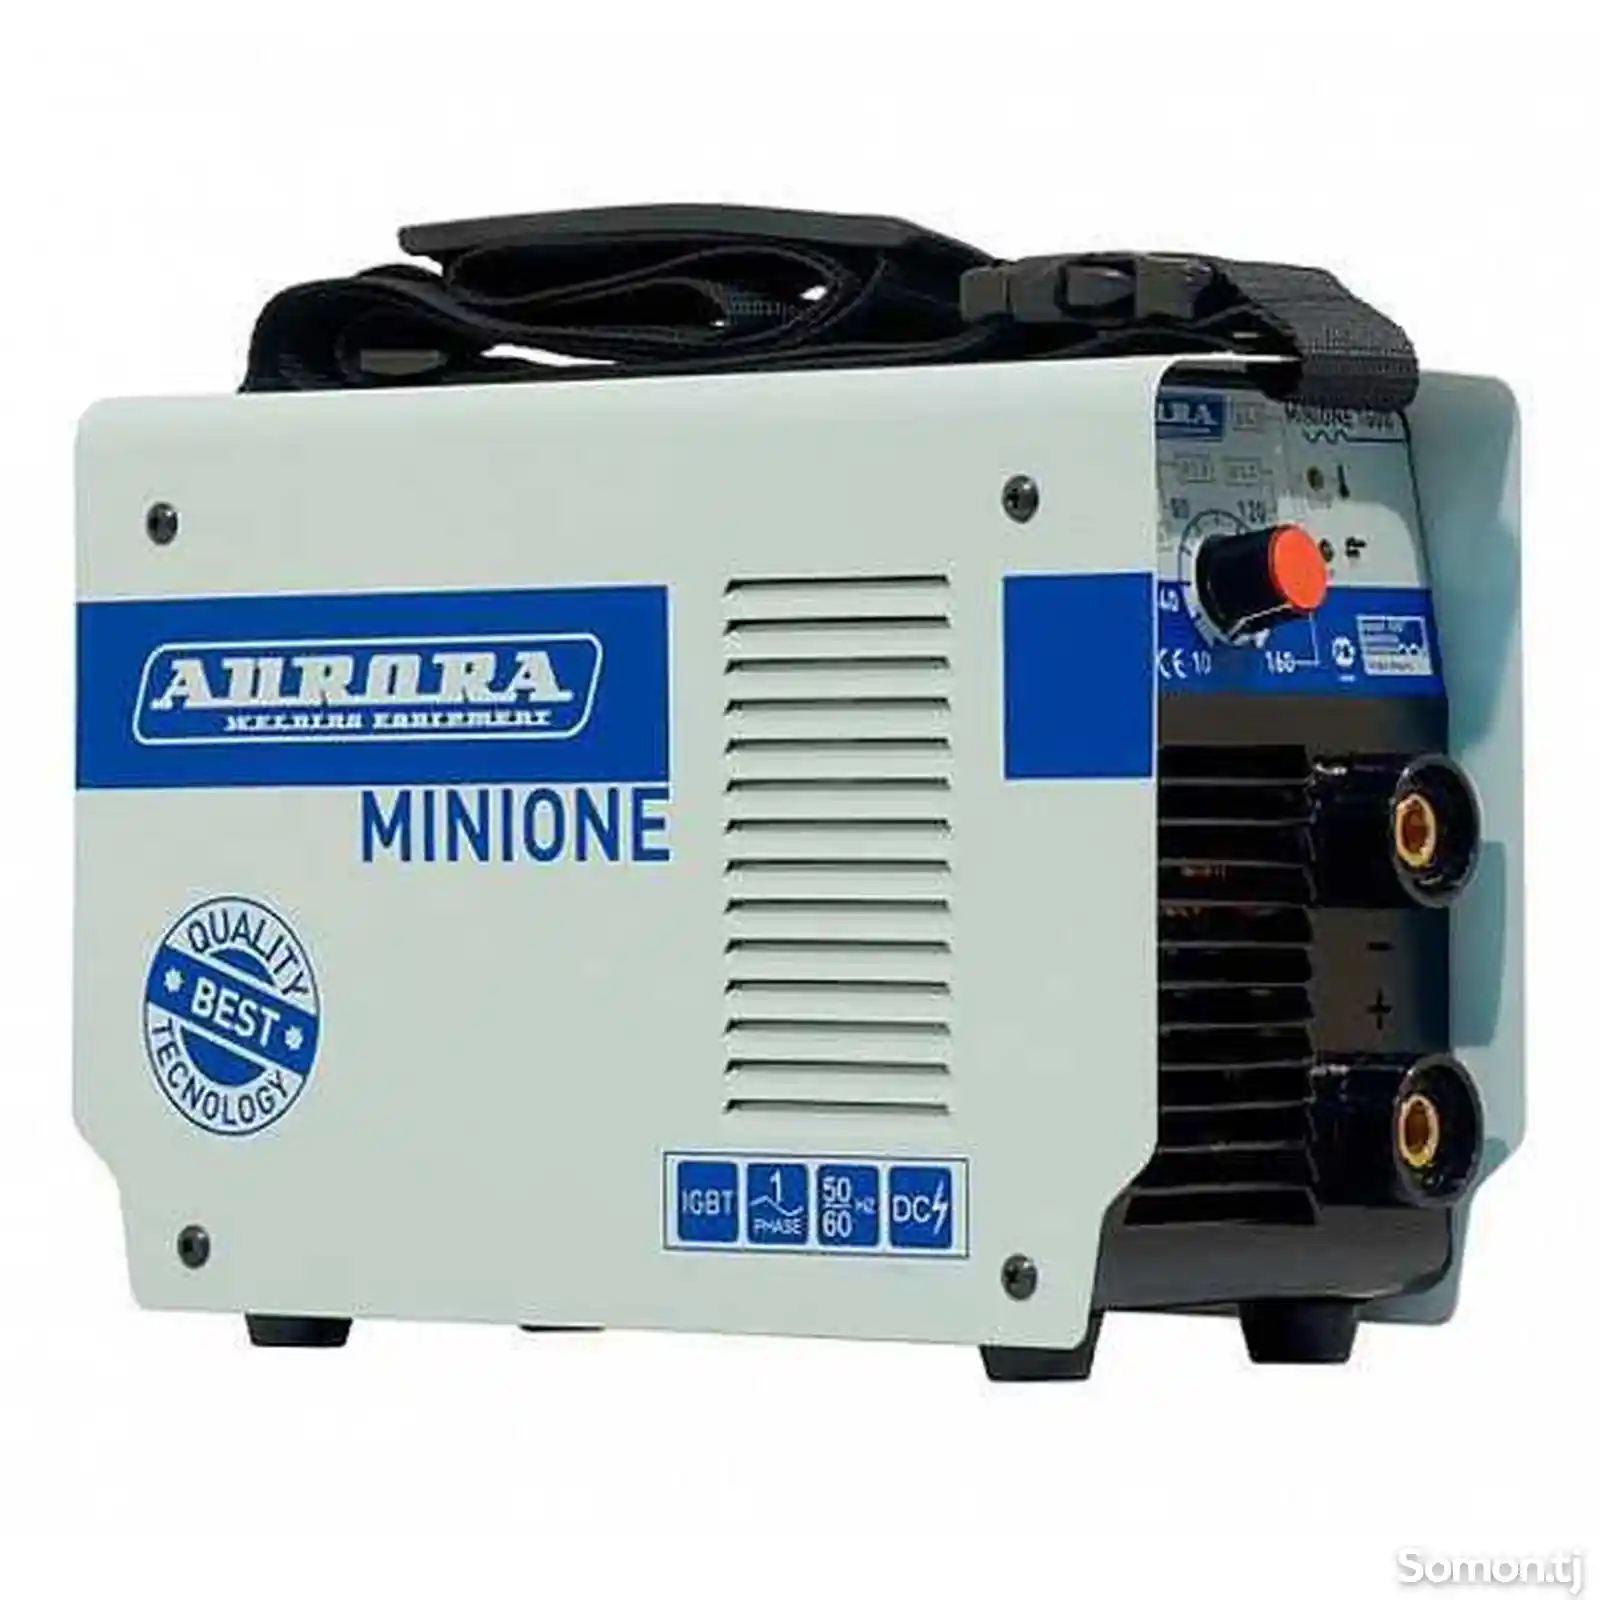 Сварочный аппарат инверторного типа Aurora Minione1600 Case, Mma-7